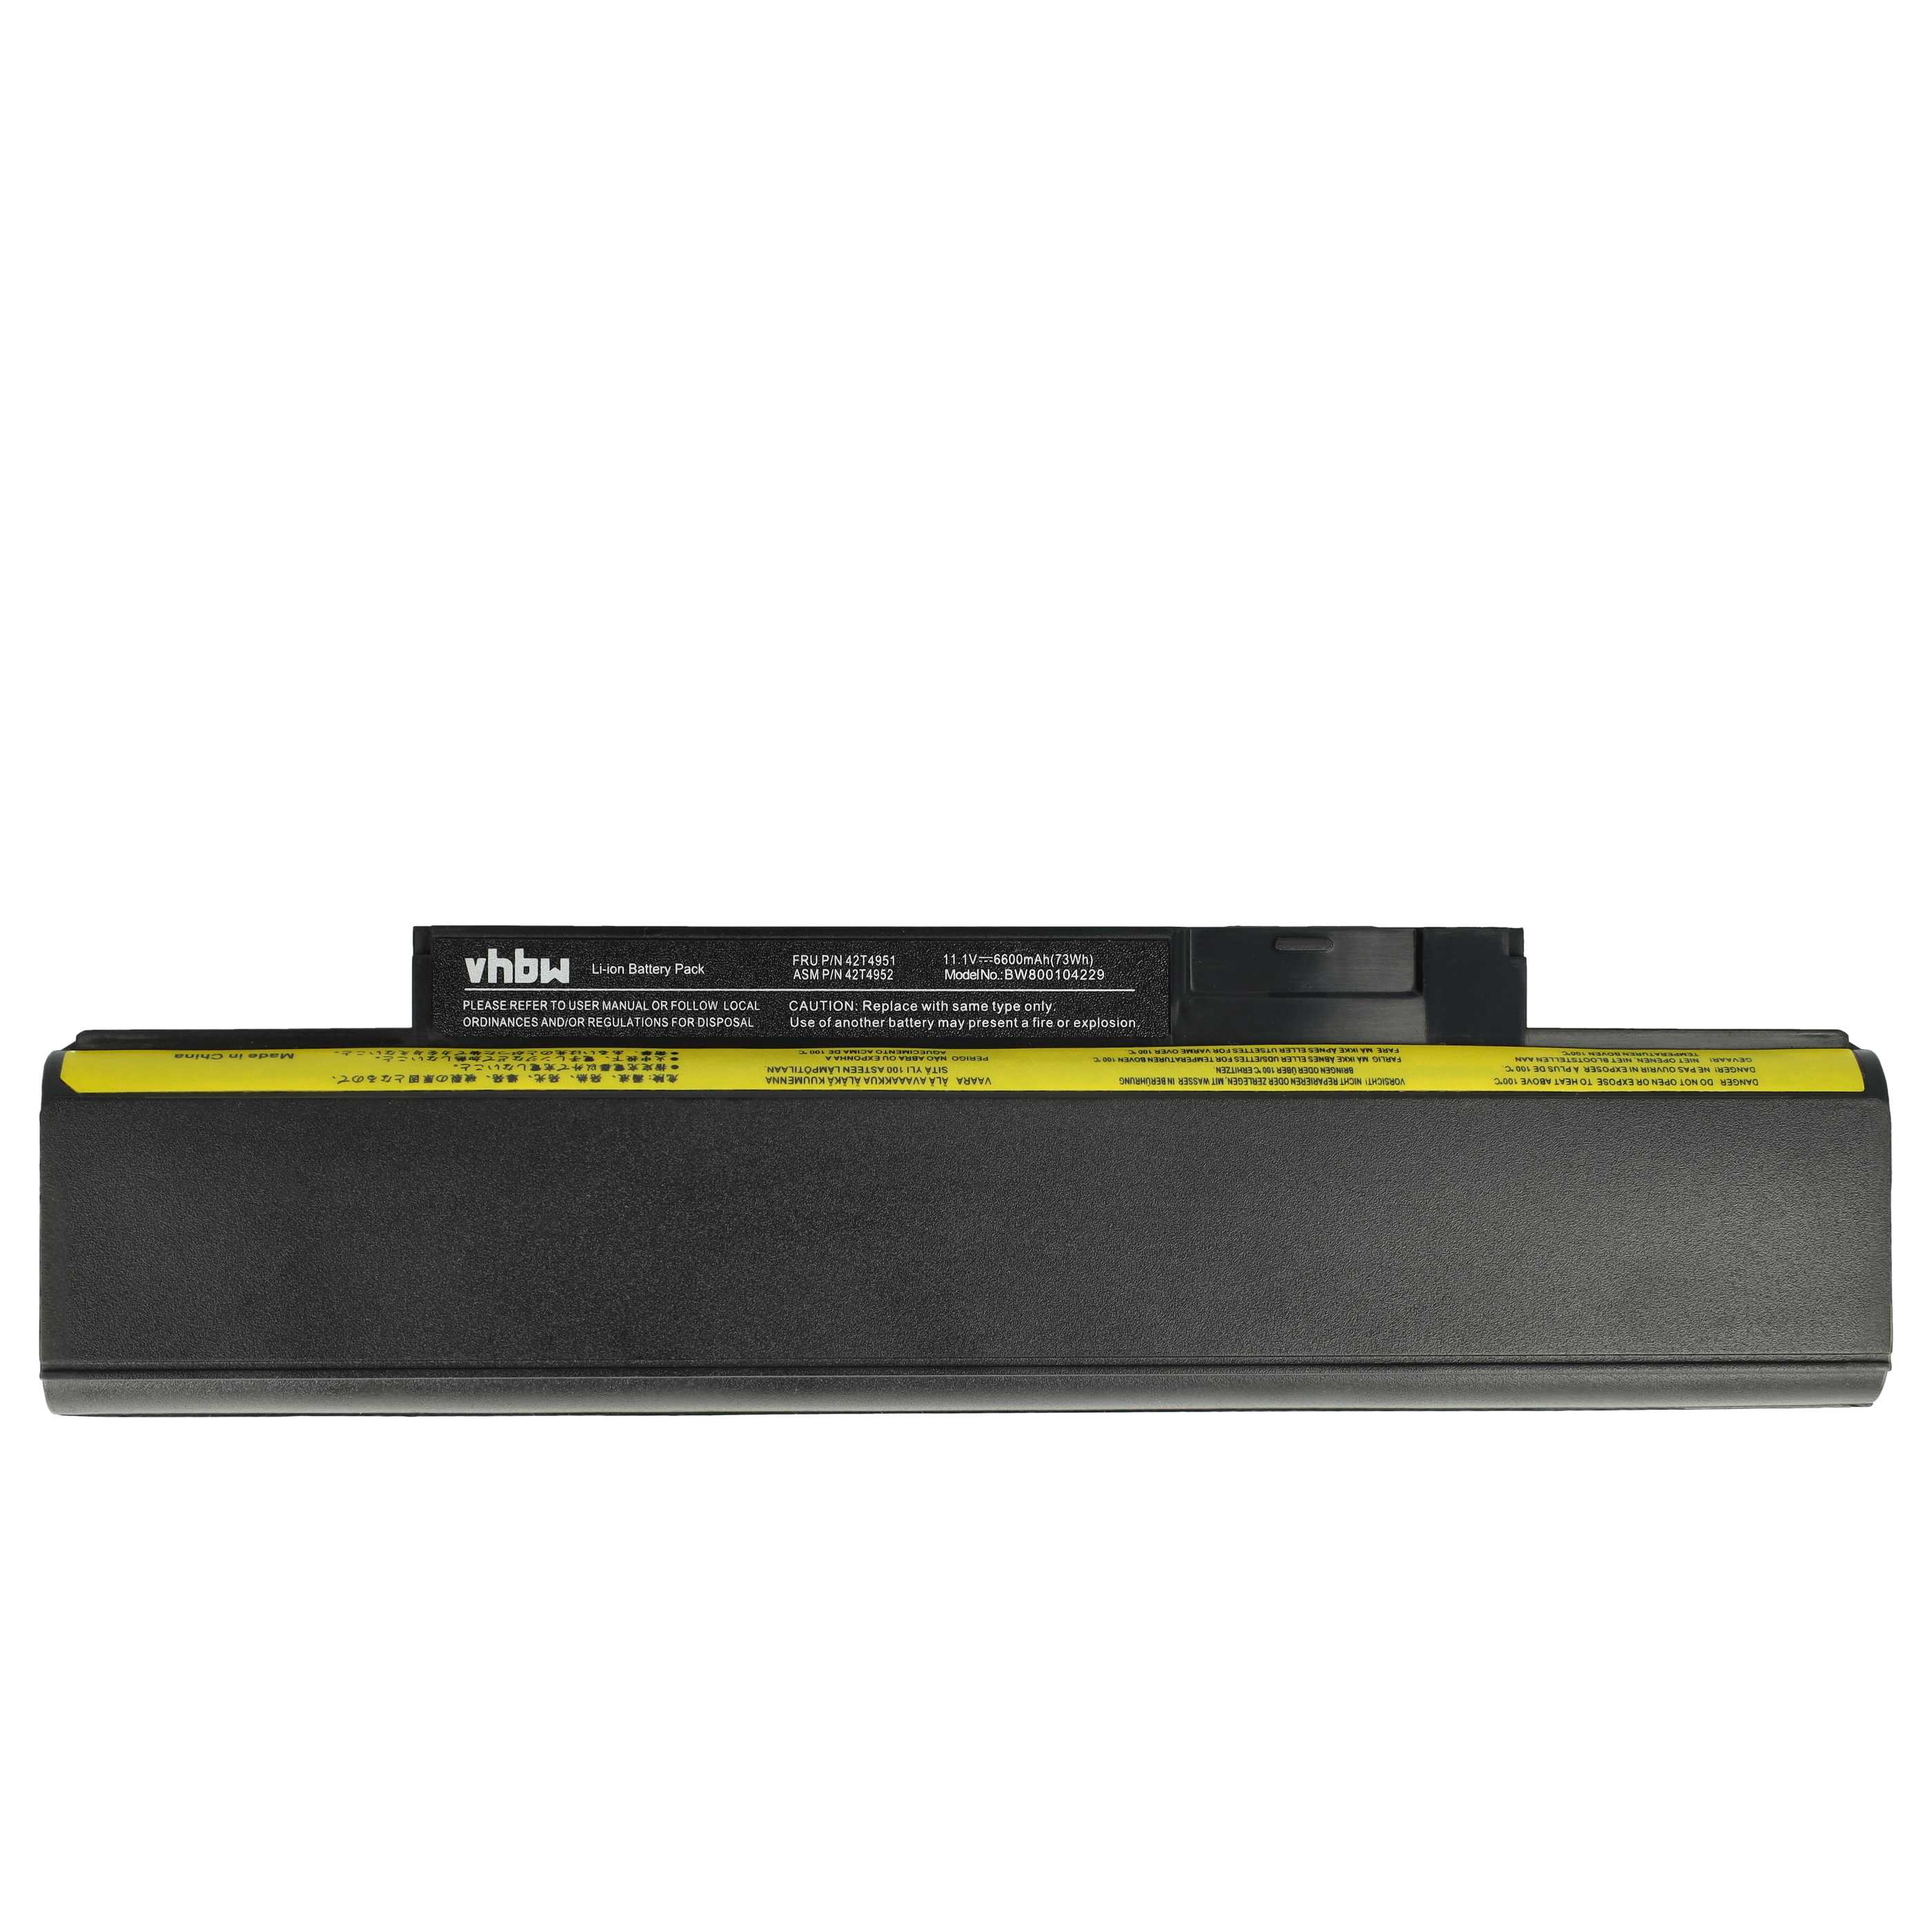 Akumulator do laptopa zamiennik Lenovo 42T4945, 42T4943, 0A36292, 0A36290 - 6600 mAh 11,1 V Li-Ion, czarny